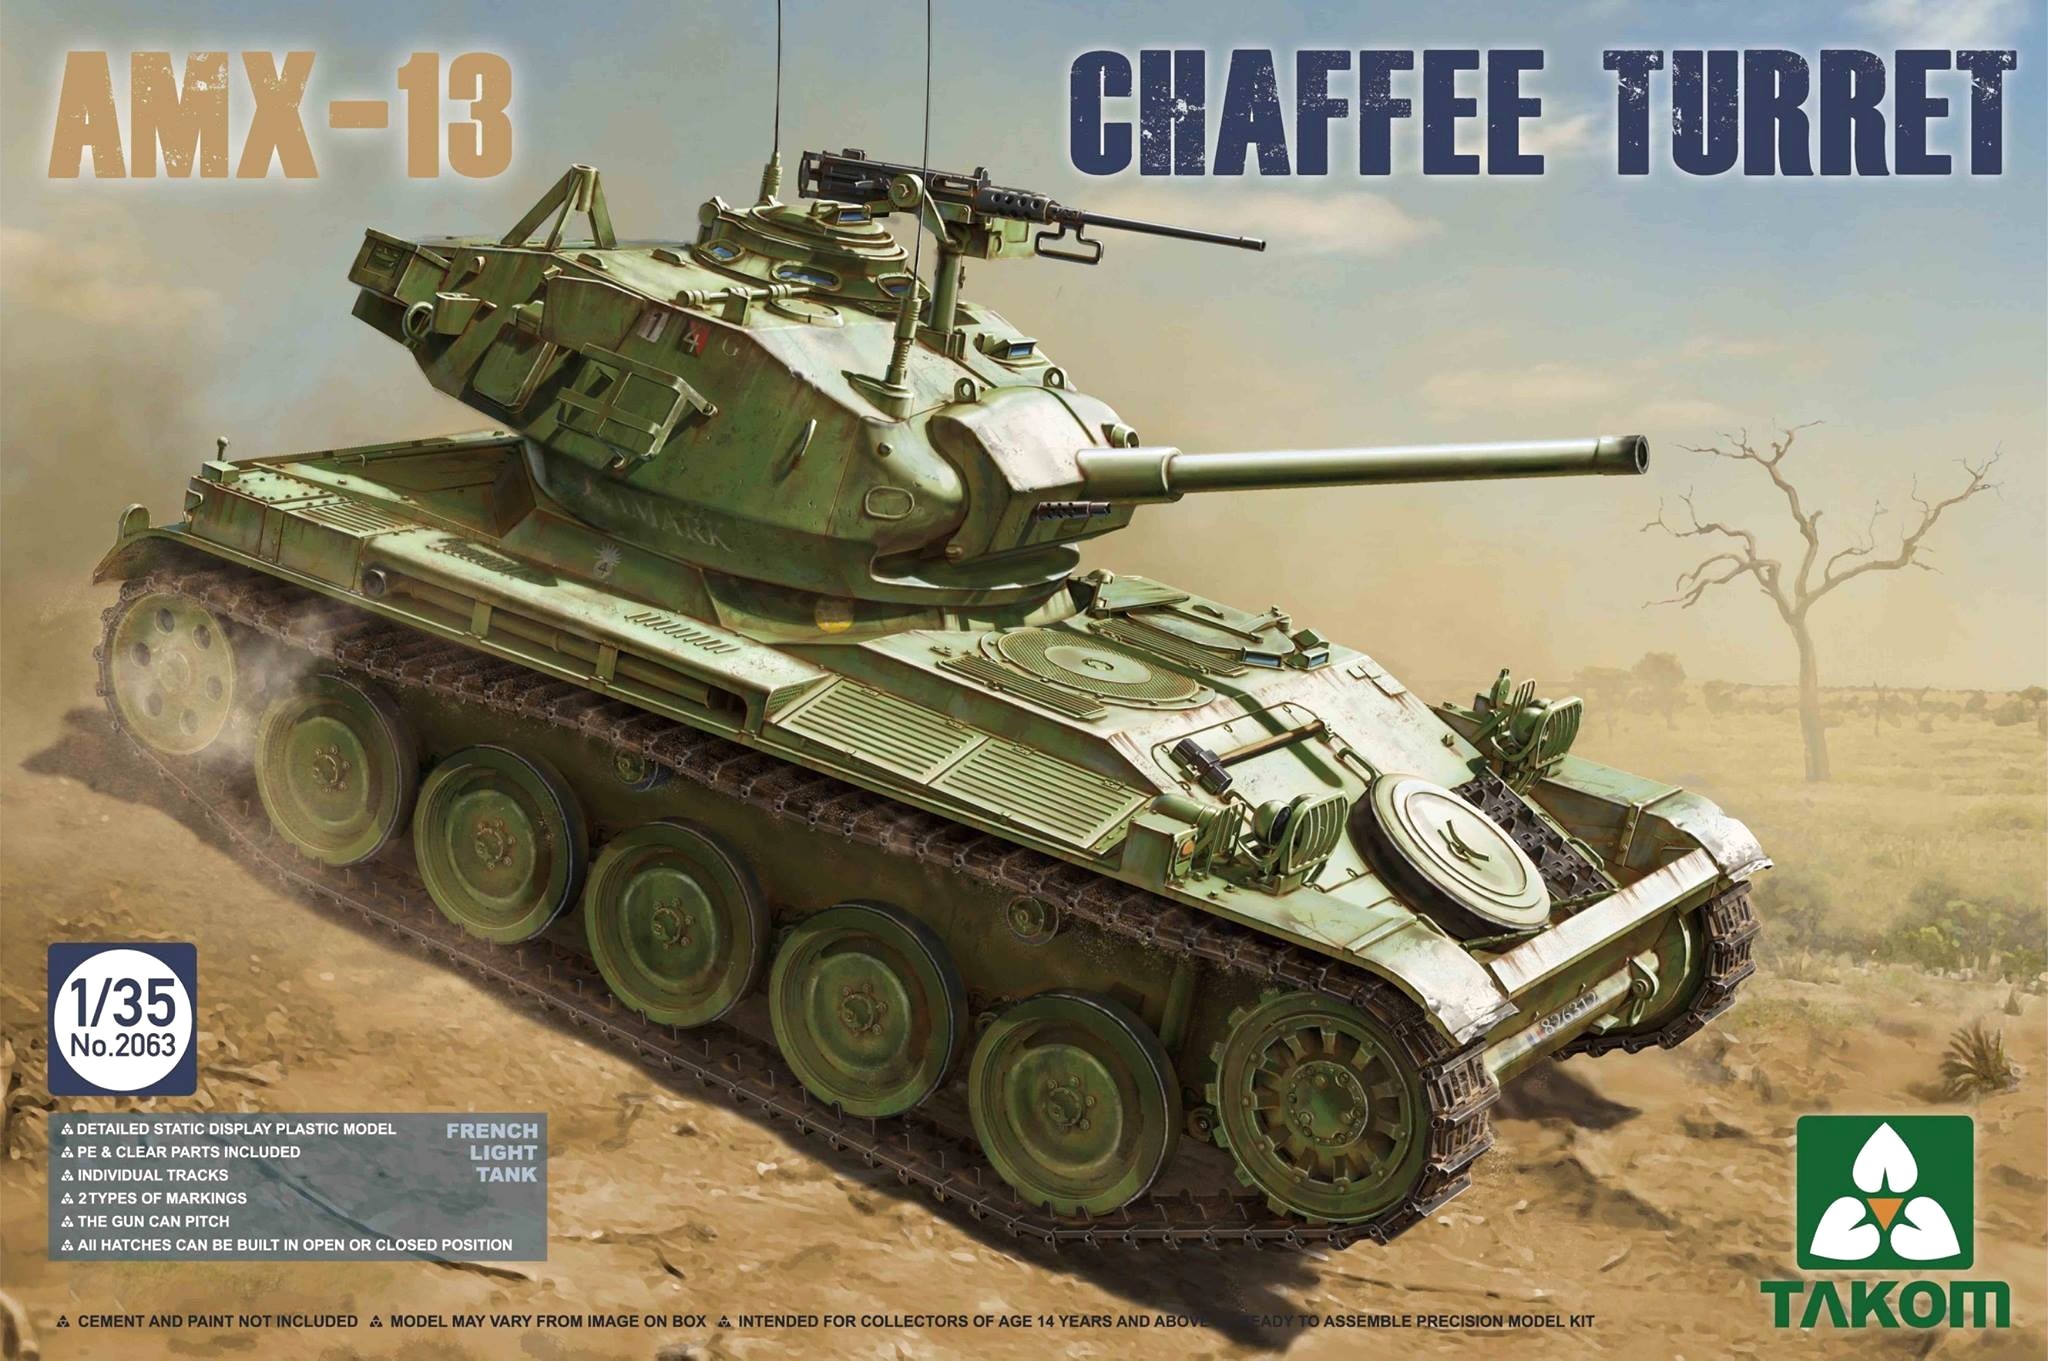 French Light Tank AMX-13 Chaffe Turret in Algerian War (1954-1962)